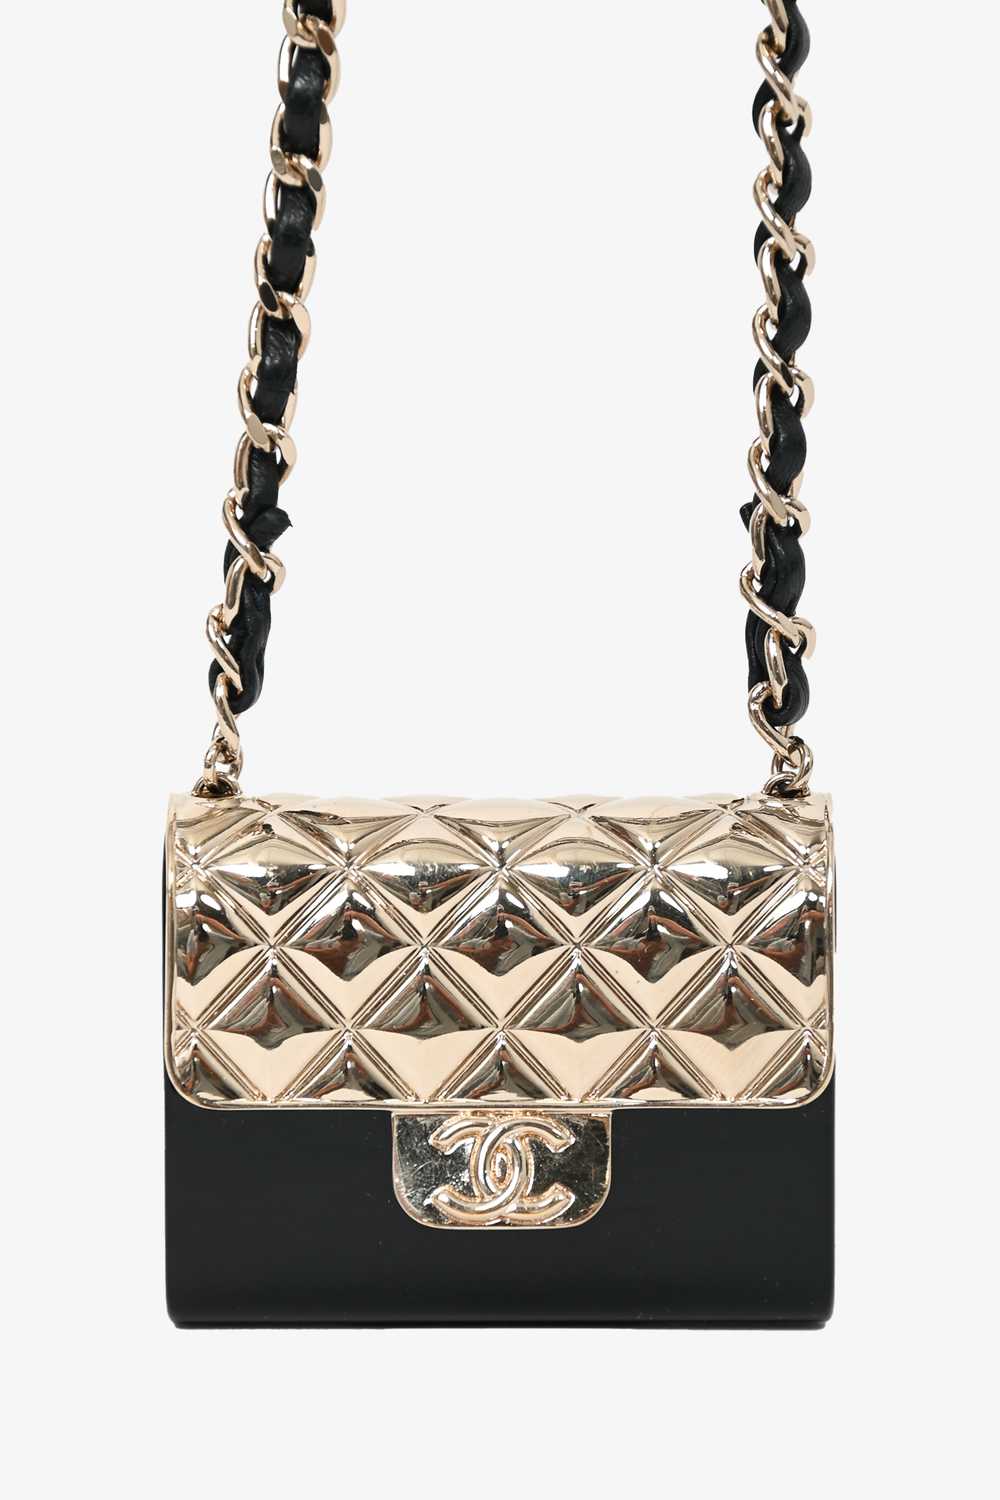 Pre-loved Chanel™ Black/Gold Mini Purse Necklace - image 2